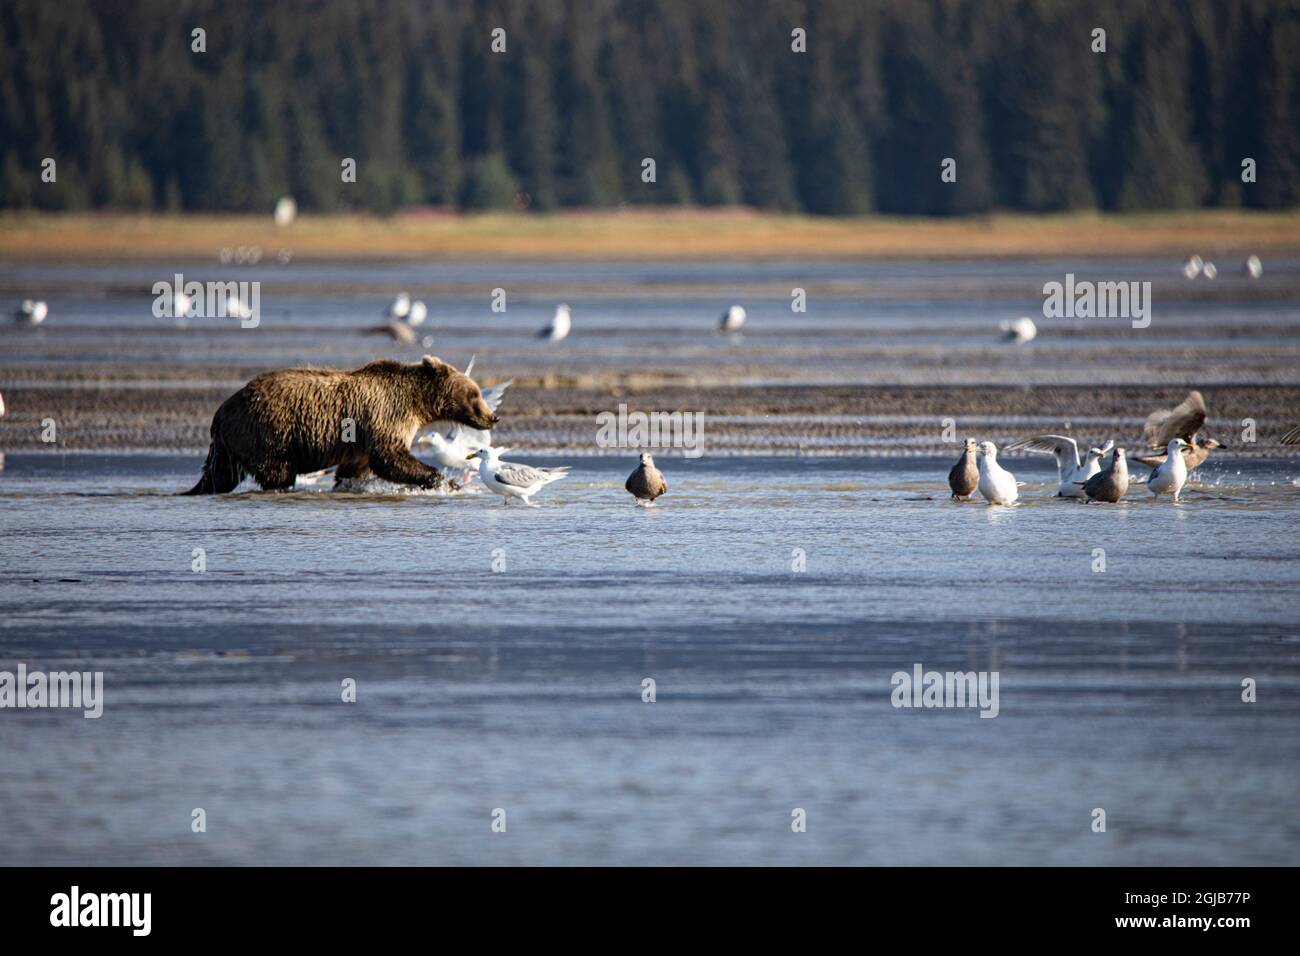 Lake Clark National Park and Preserve, Alaska, Coastal Brown Bear splashes through the stream with seagulls, Stock Photo